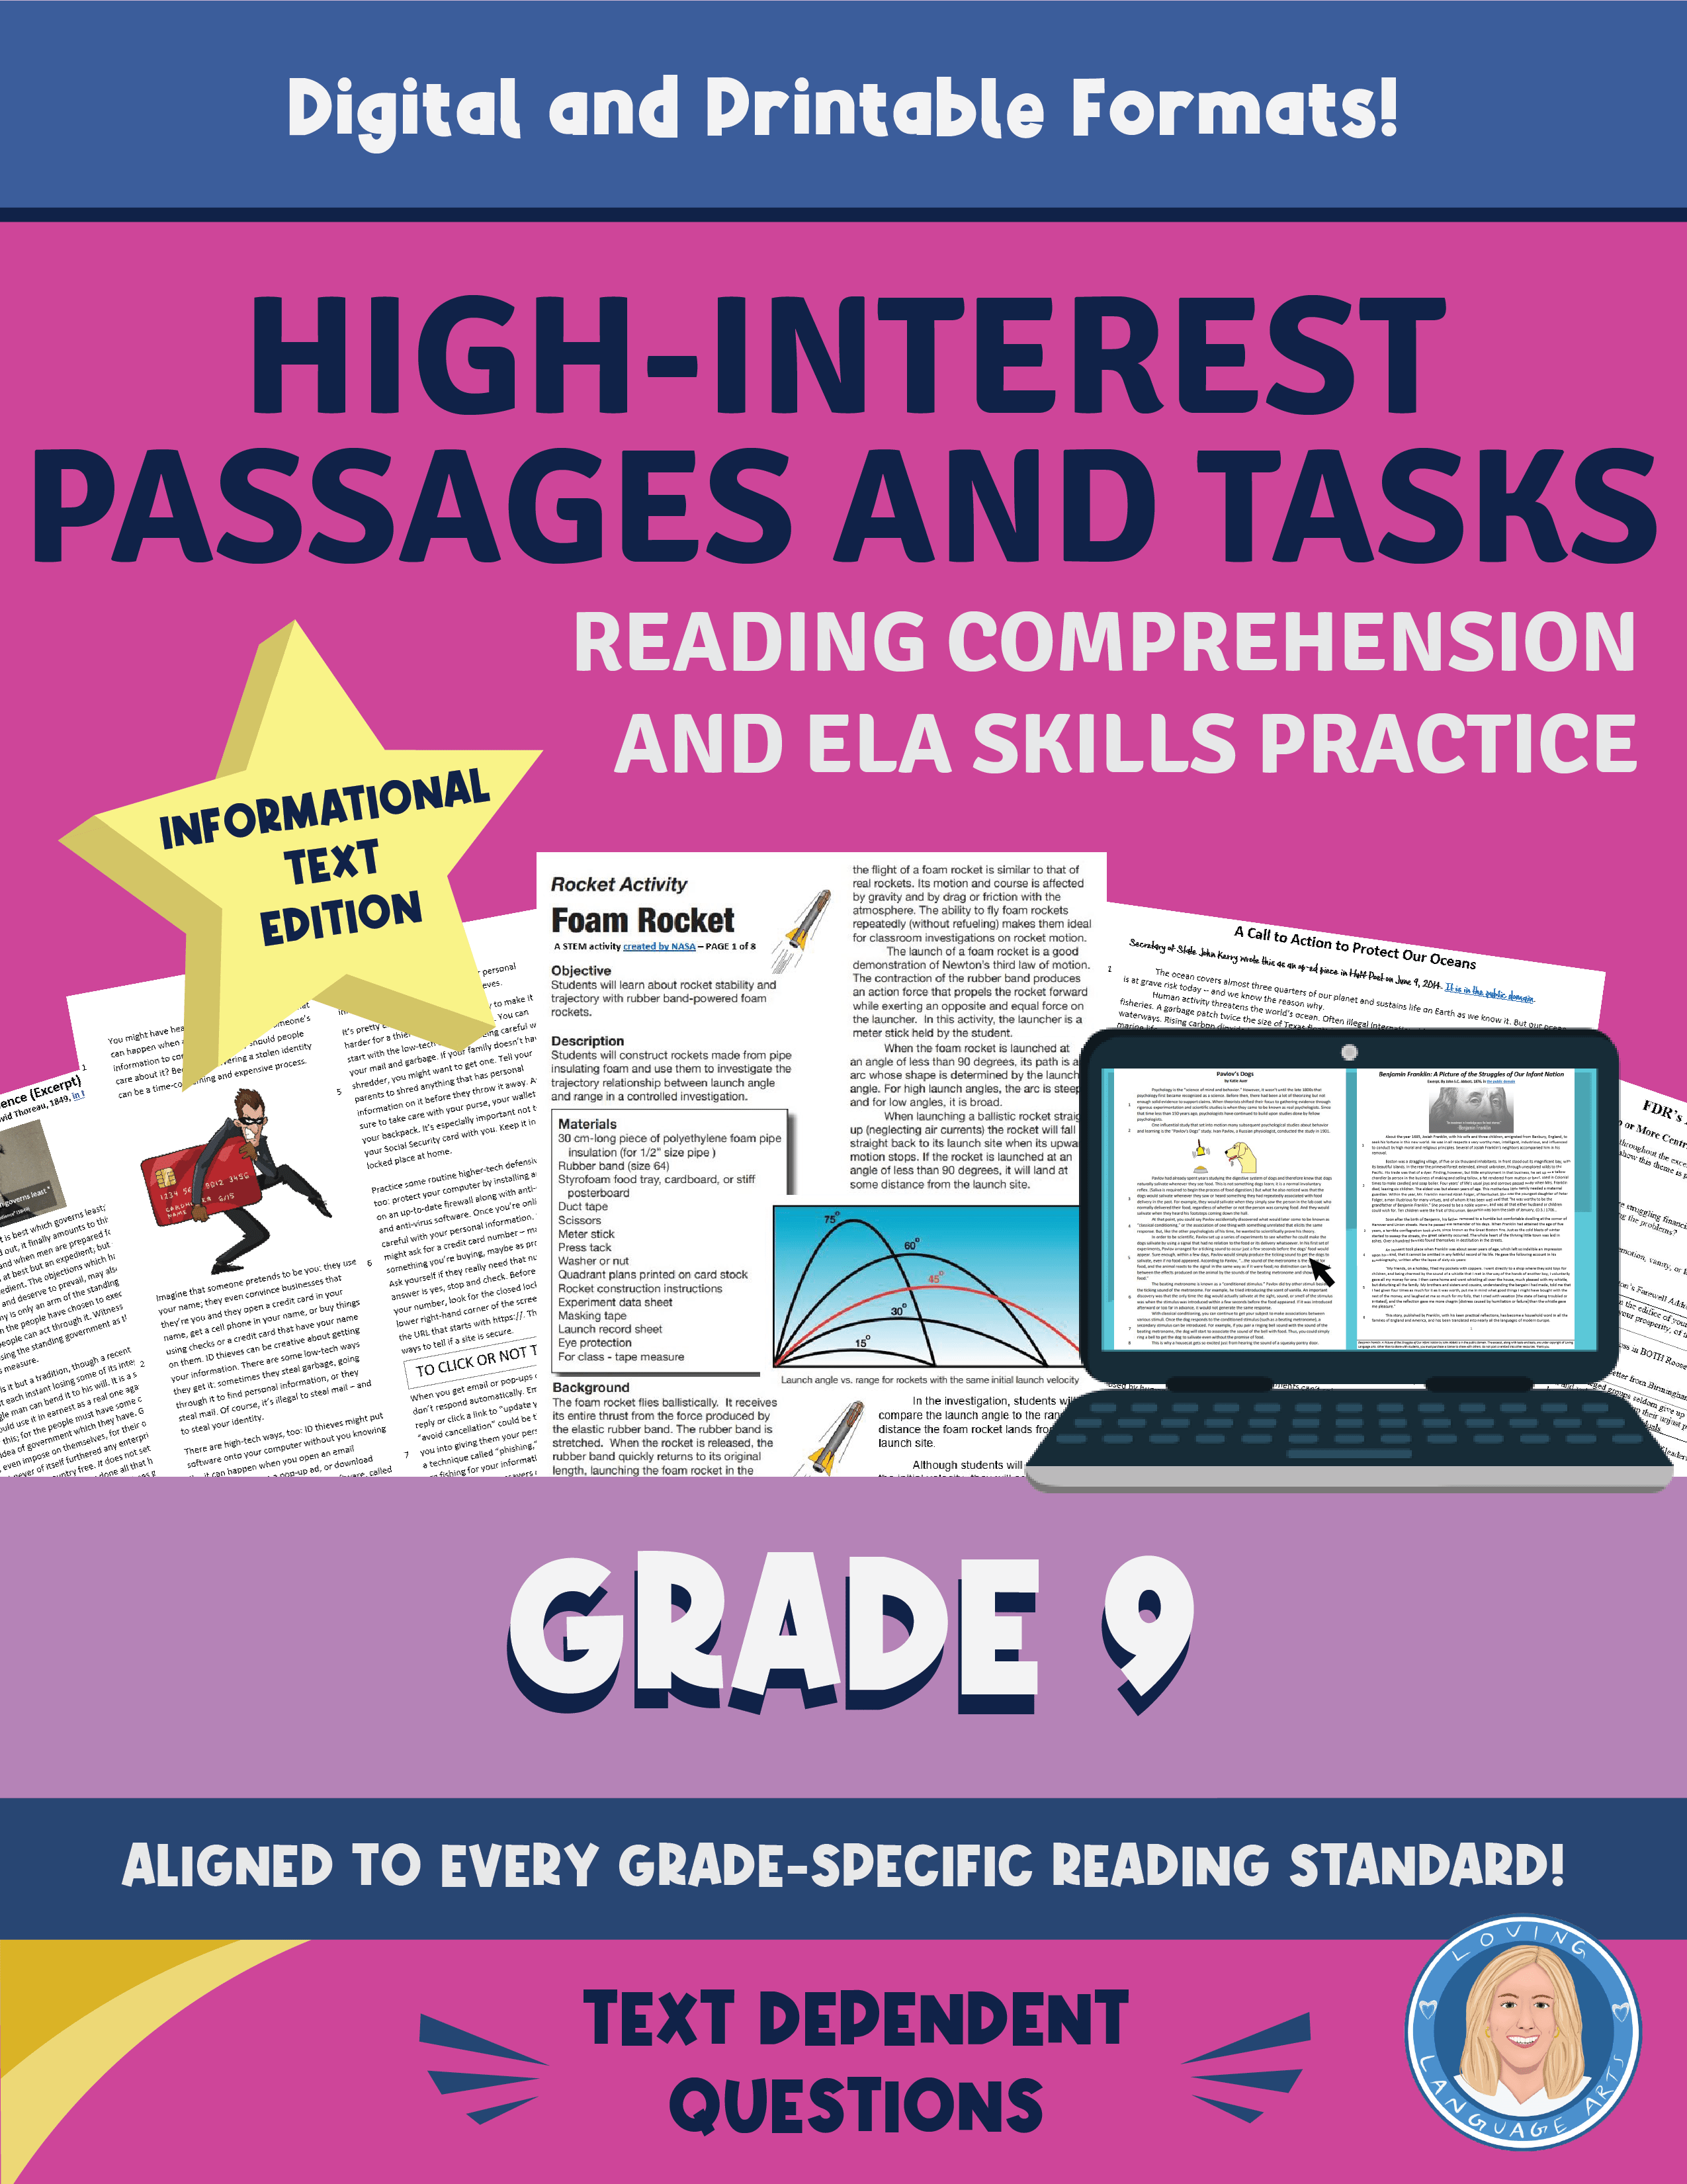 9th grade language arts workbook - High-interest passages and tasks.